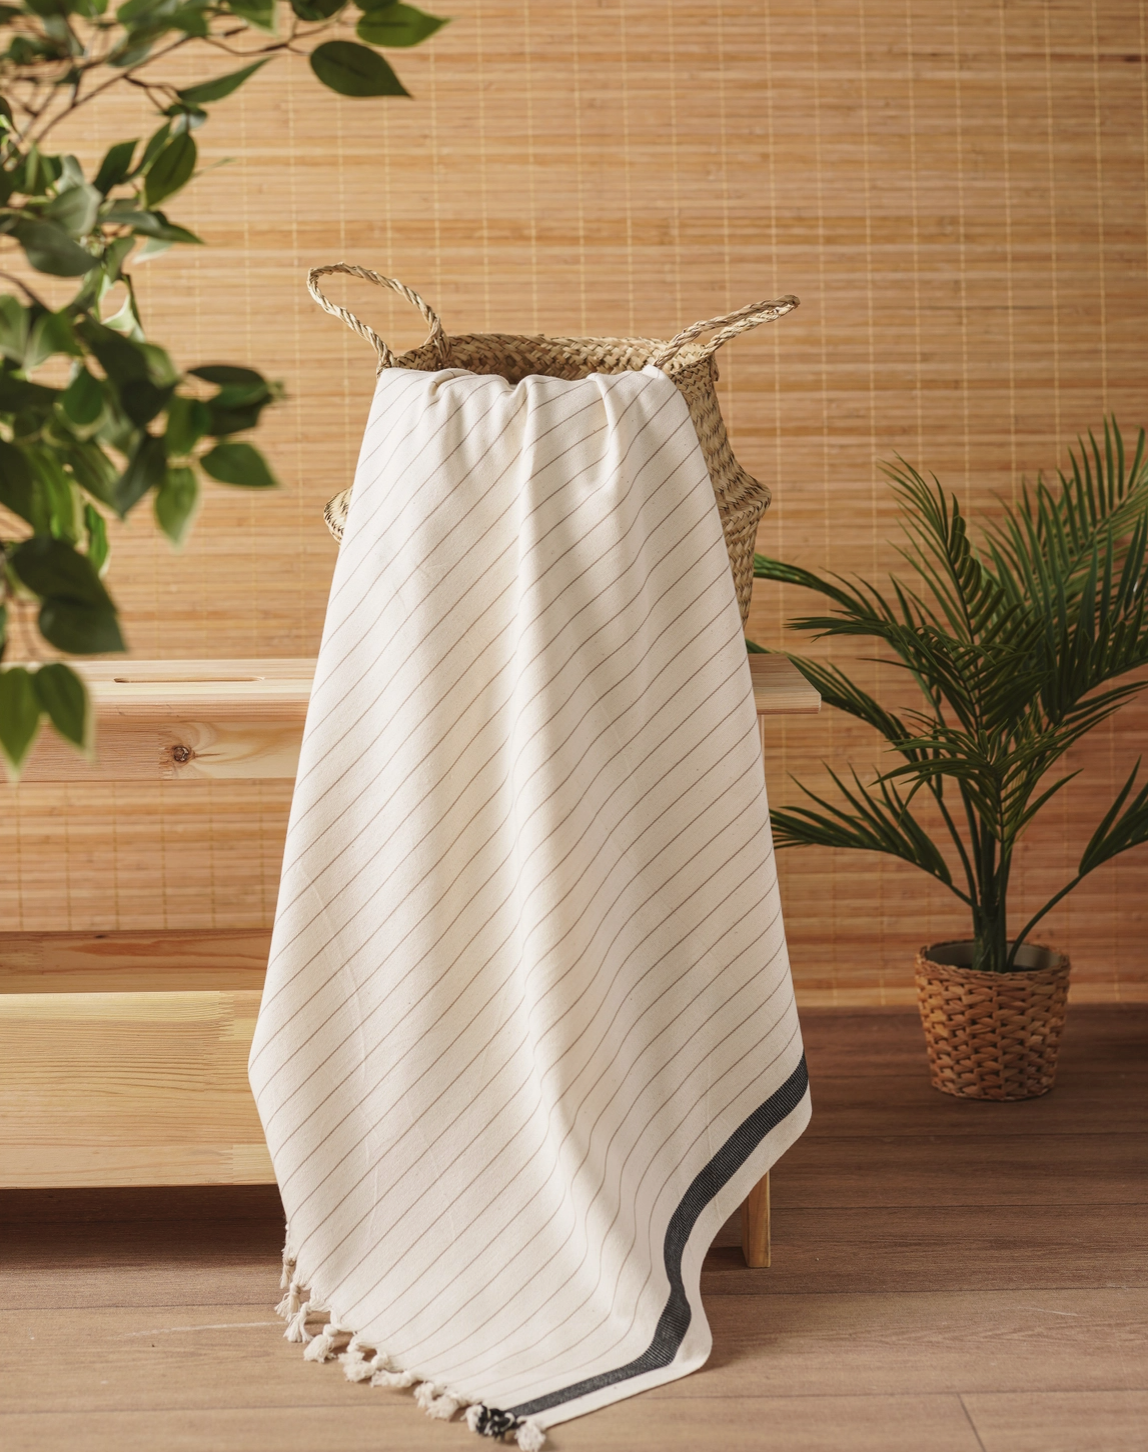 Soft Bliss Turkish Bath Towel